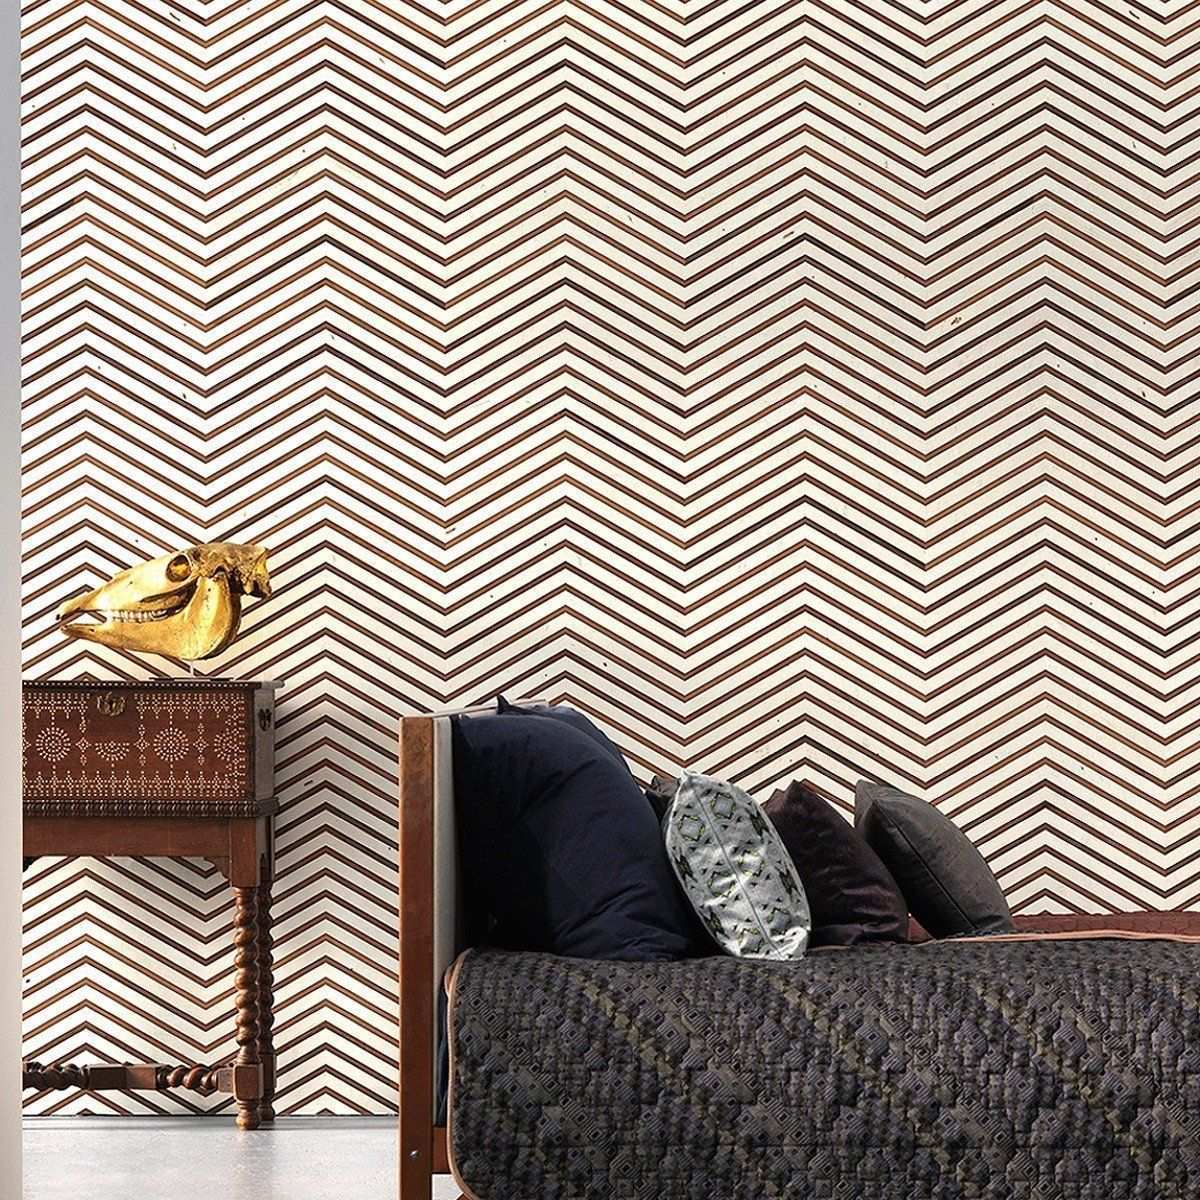 Tapete Timber Stripes Wallpaper Col 04 Tapetenagentur De Gestreifte Tapete Papierwande Moderne Muster